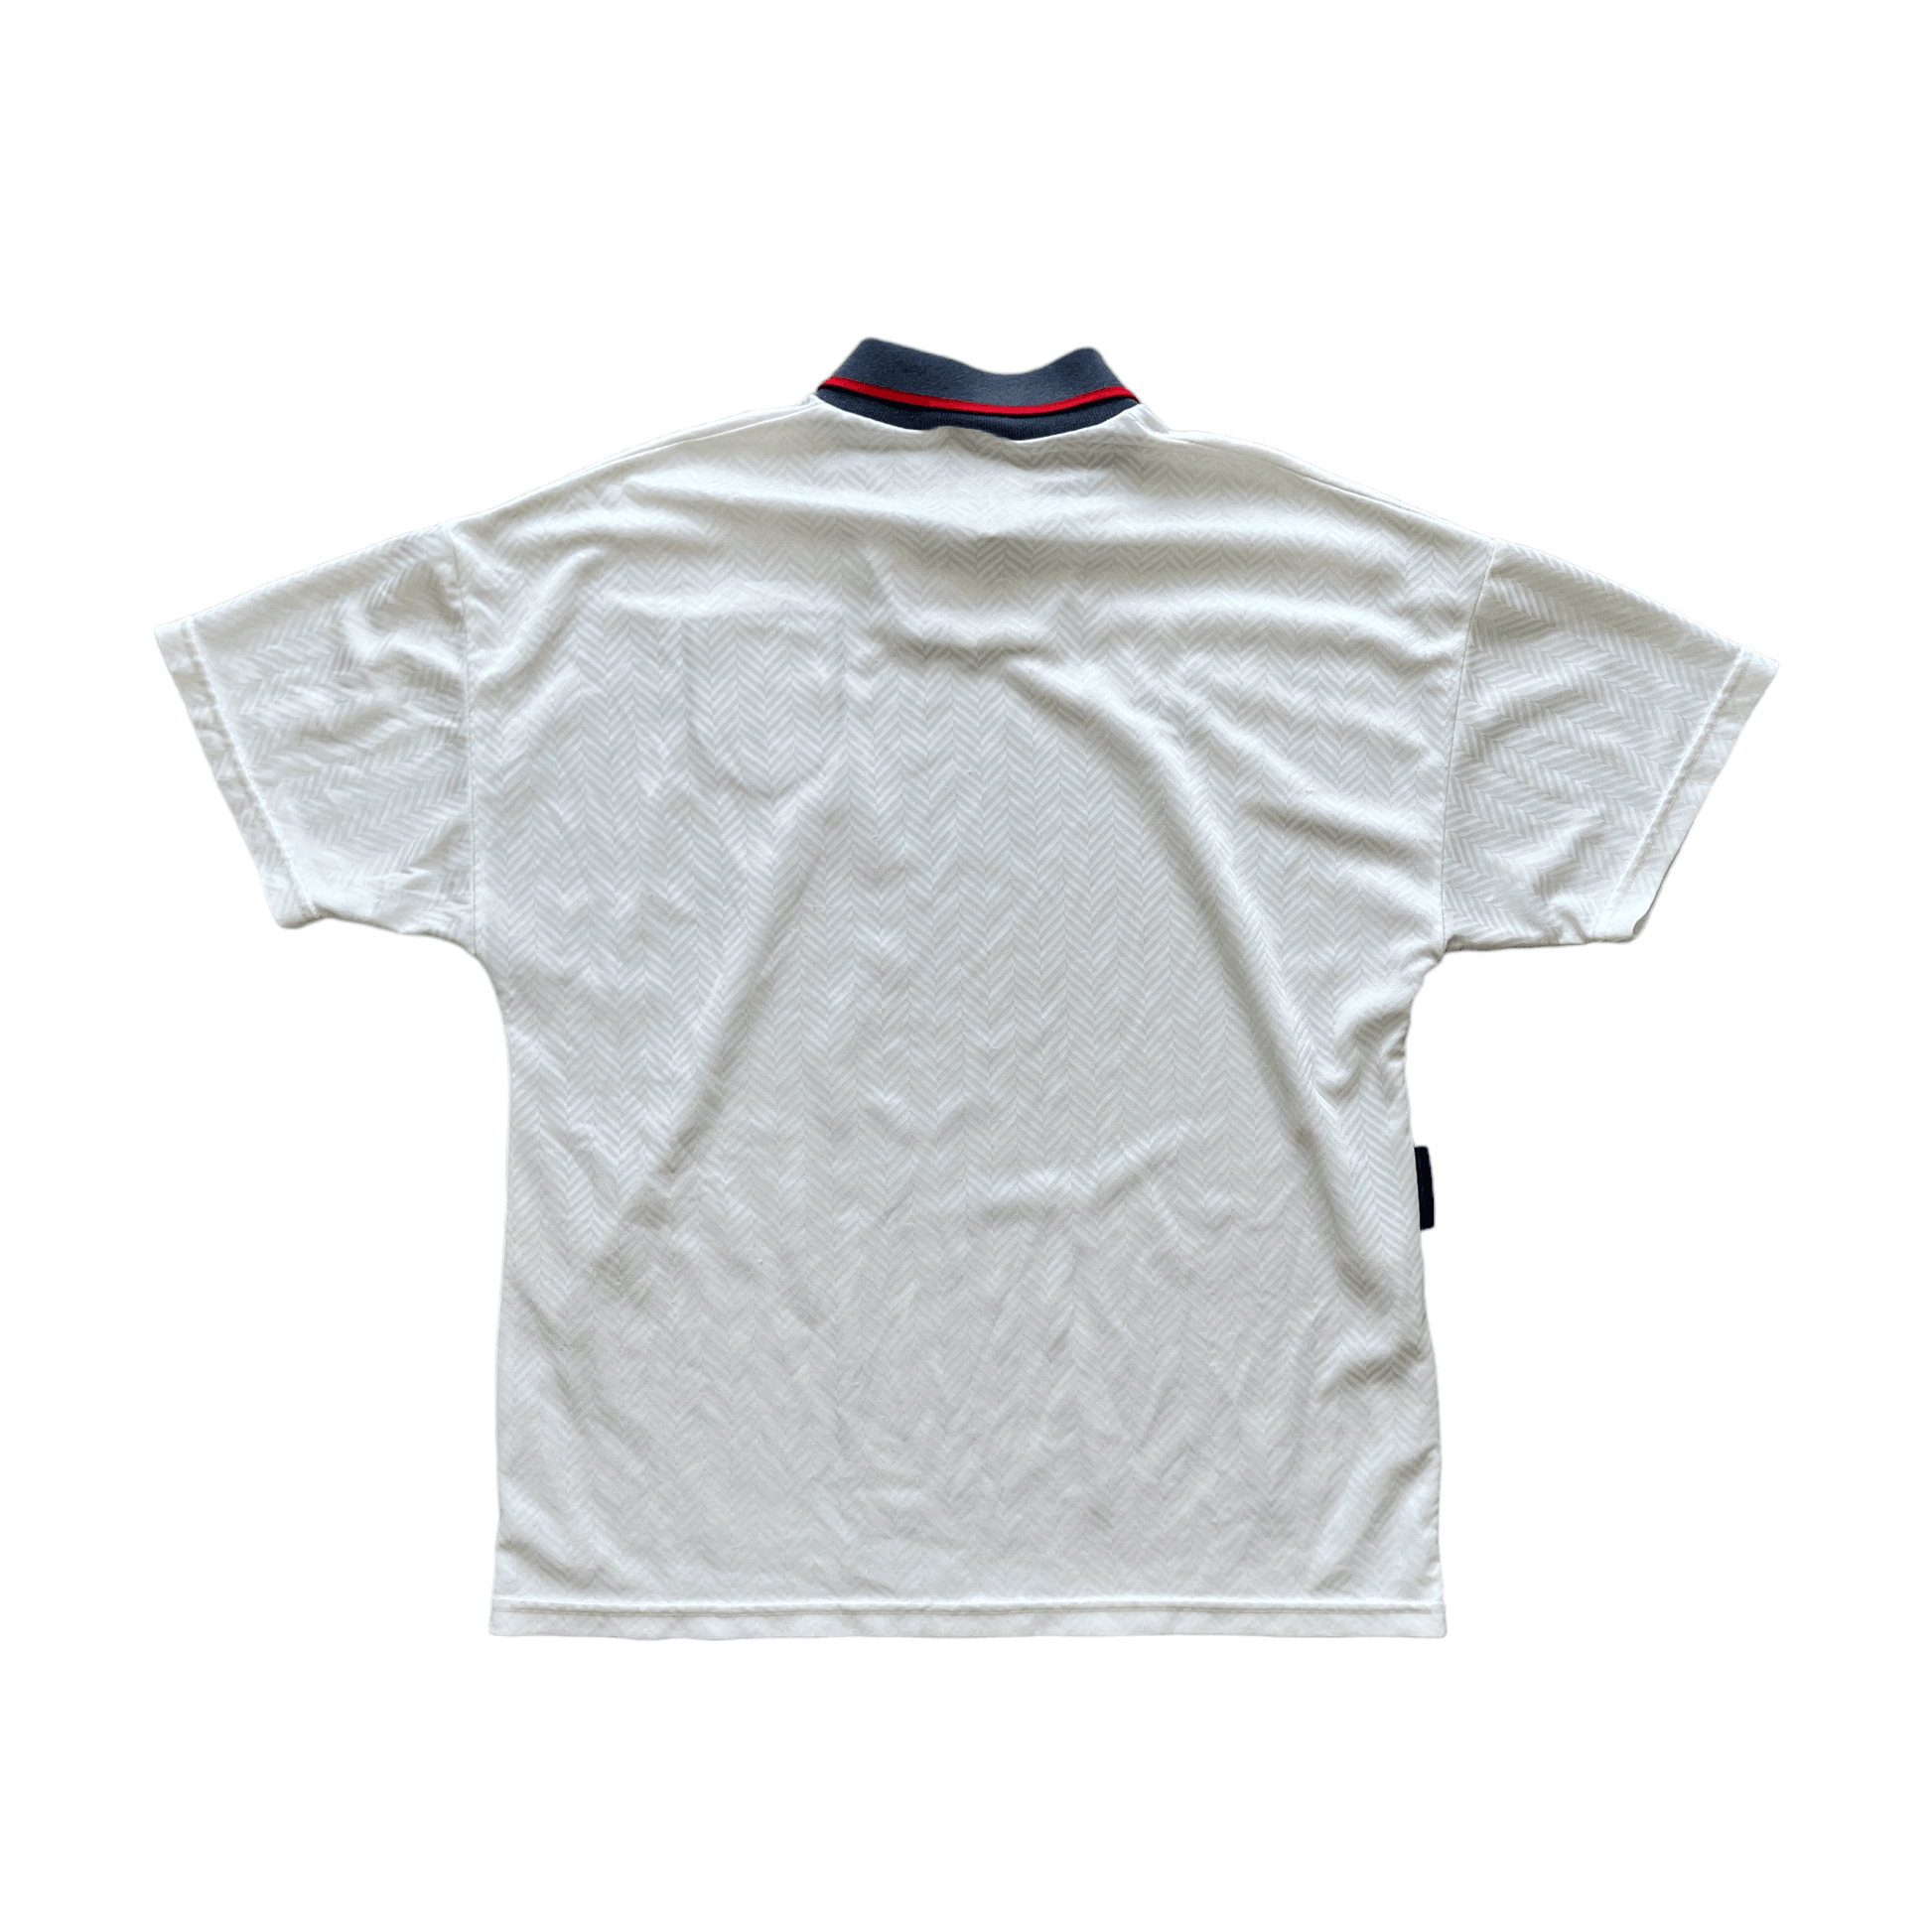 1993-95 White Umbro England Shirt - Large - The Streetwear Studio